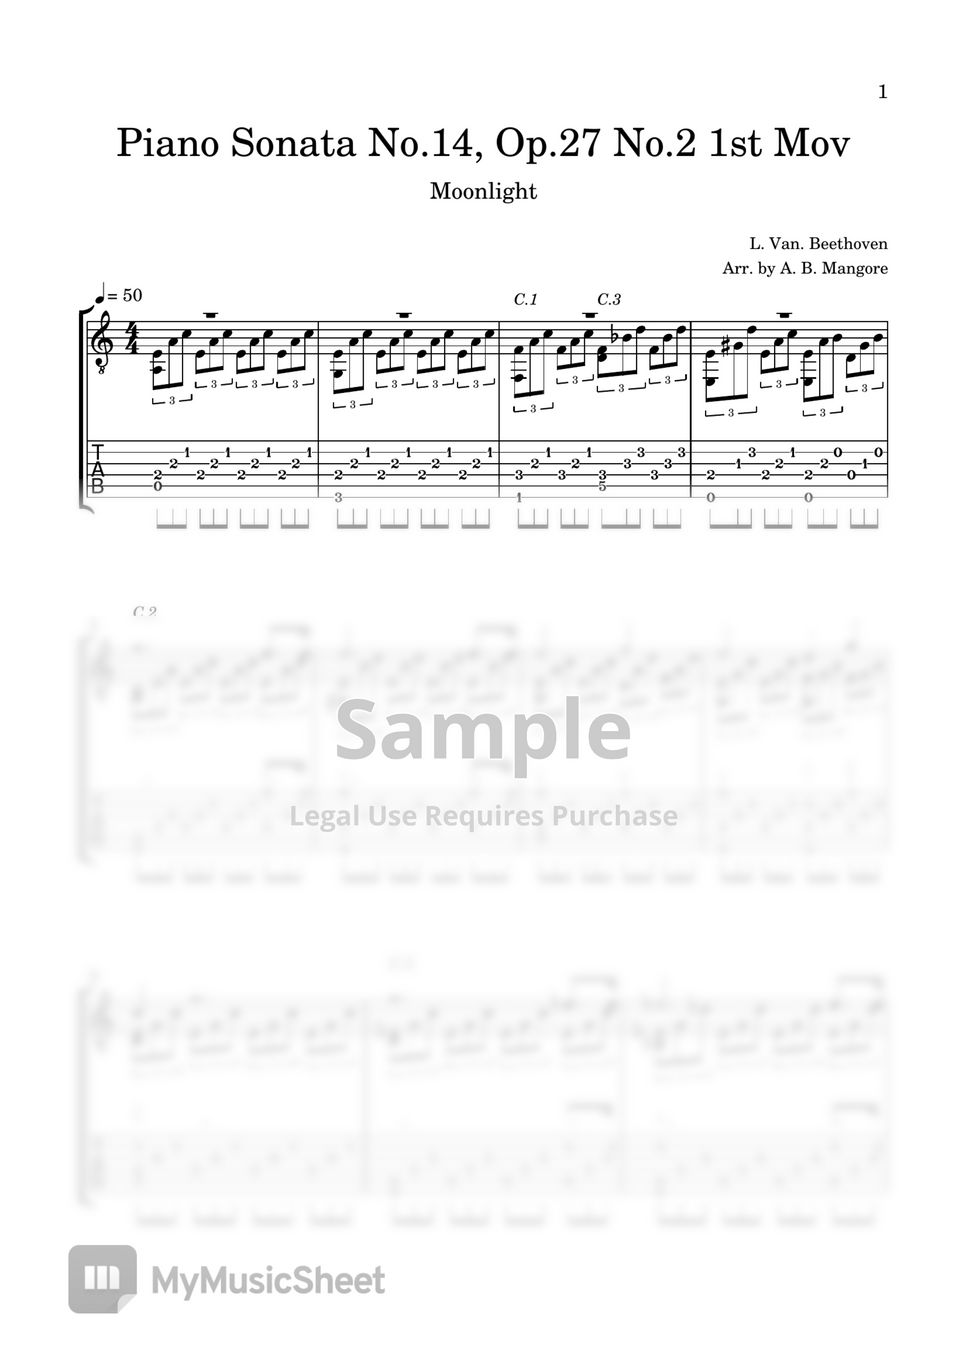 Ludwig van Beethoven - Piano Sonata No.14 1st Mov (arranged by Agustine Barrios Mangore) by LemonTree